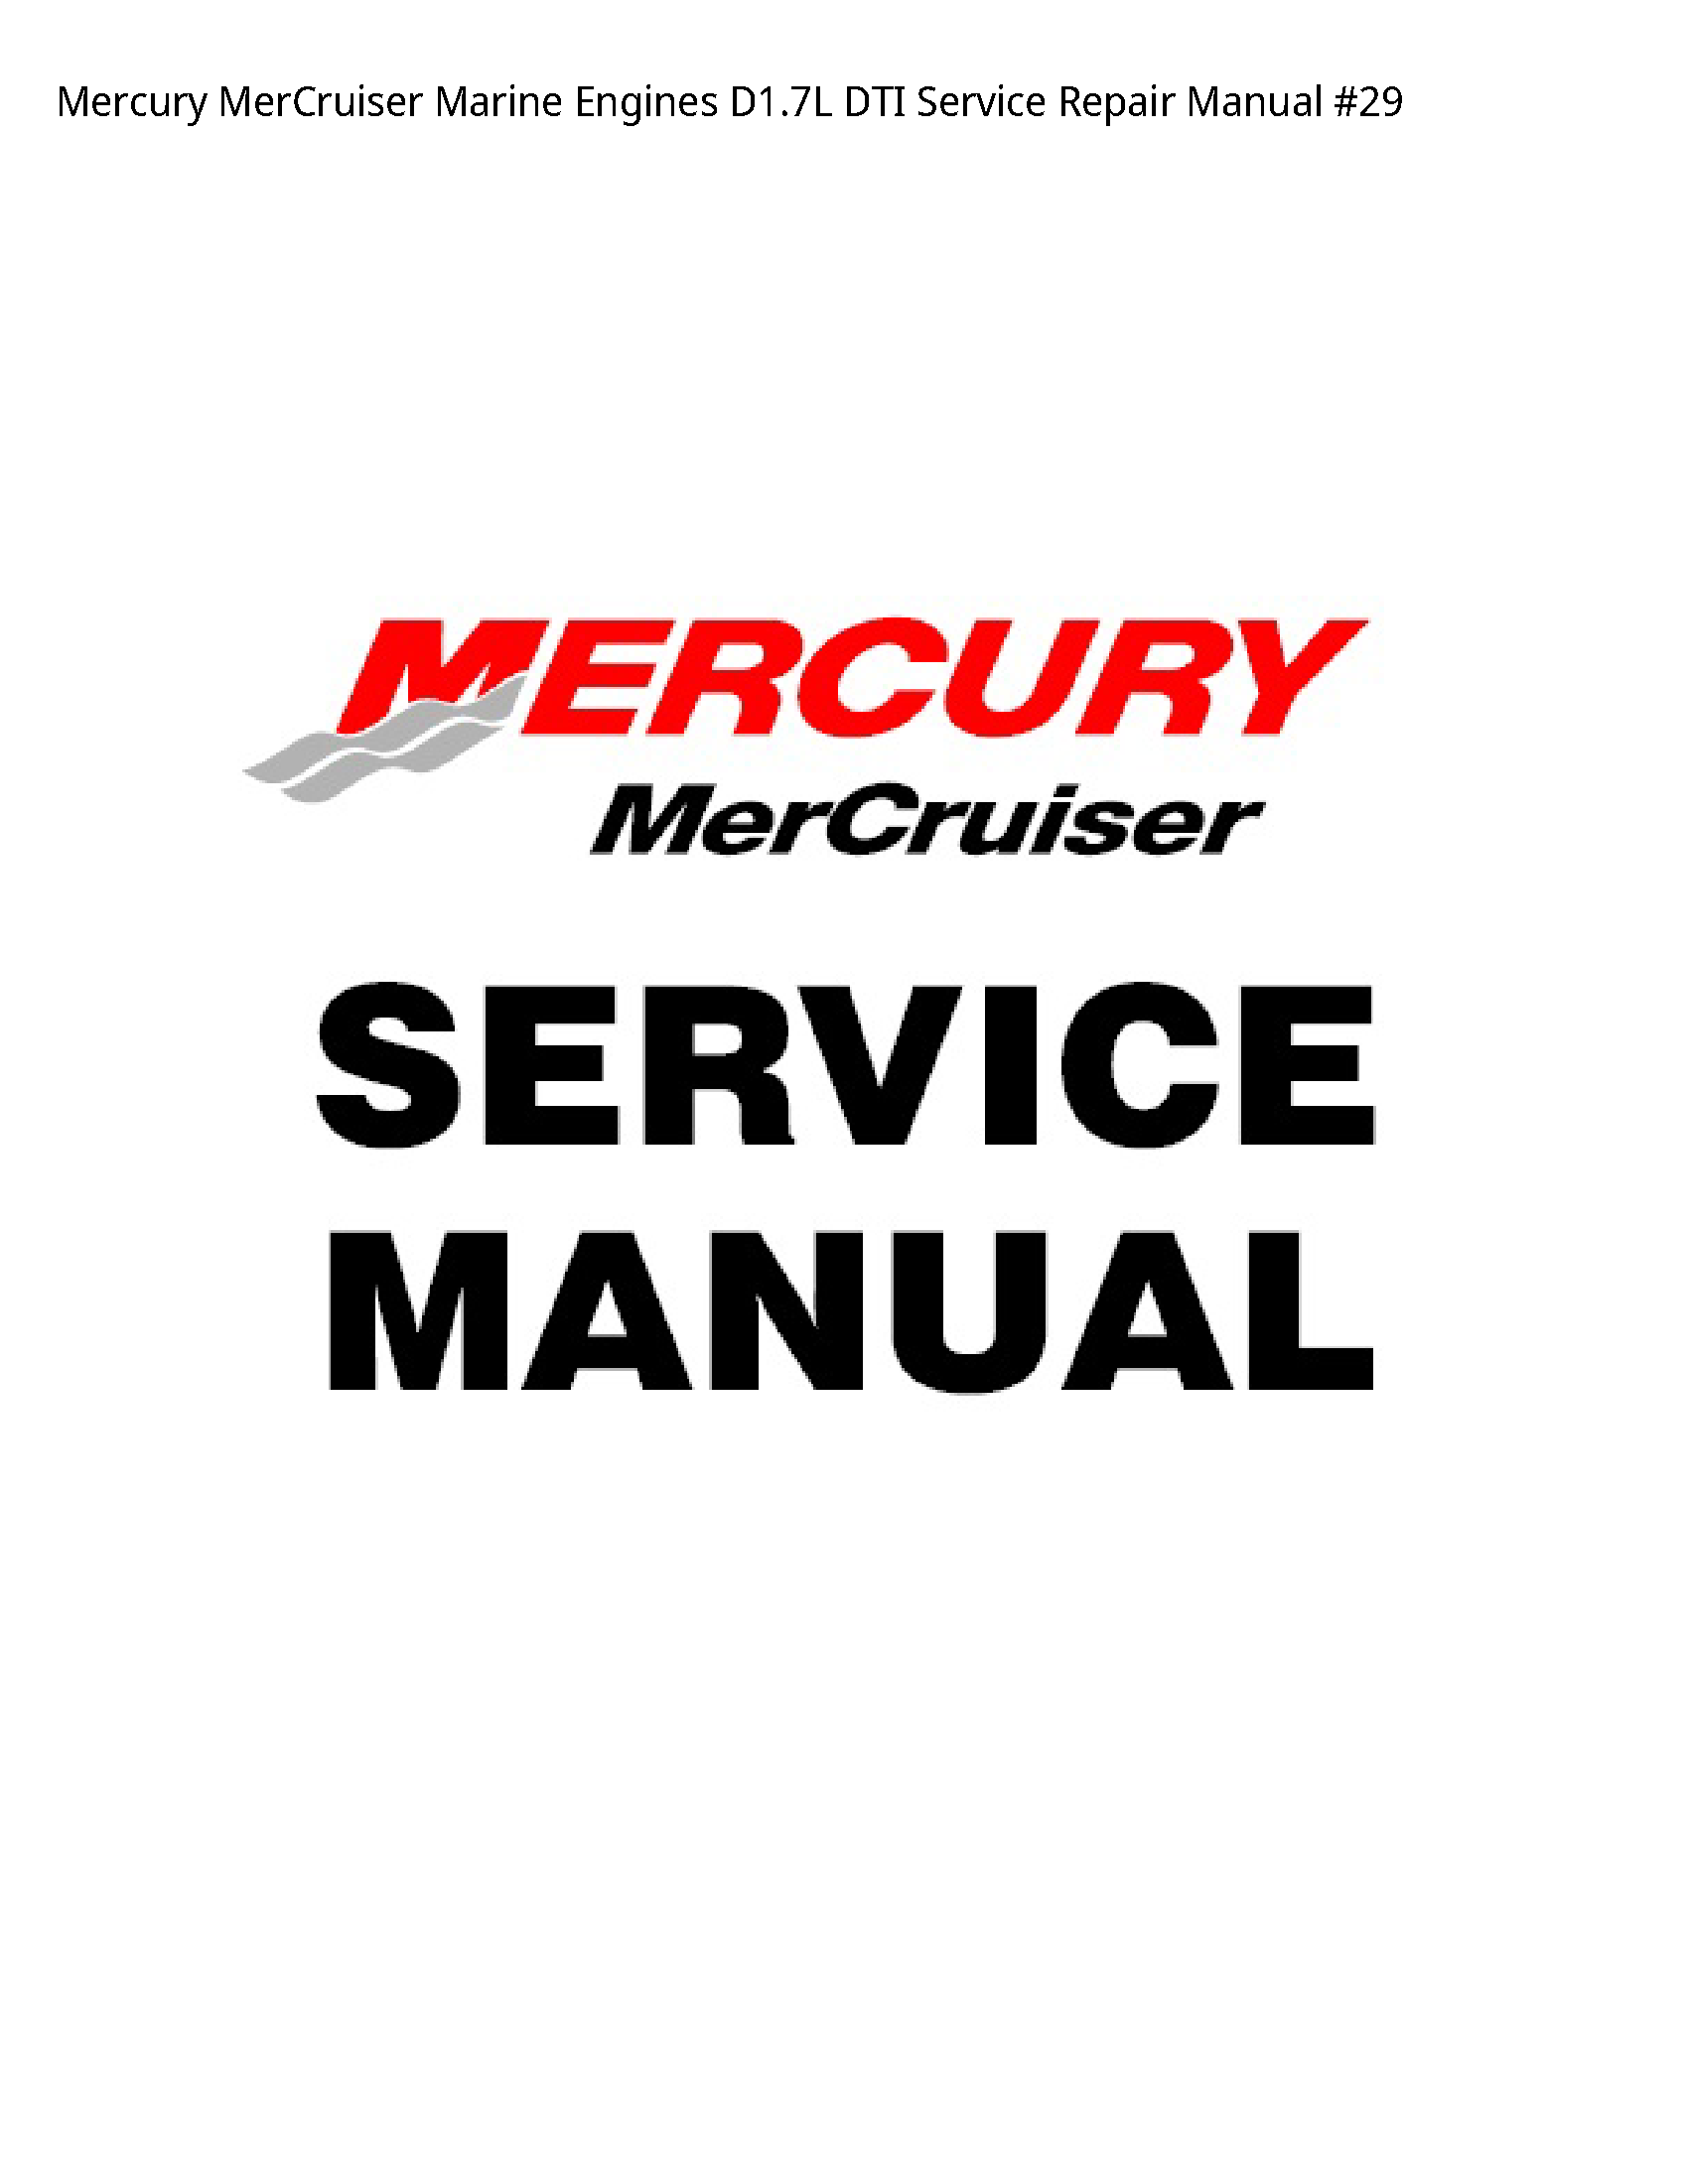 Mercury D1.7L MerCruiser Marine Engines DTI manual